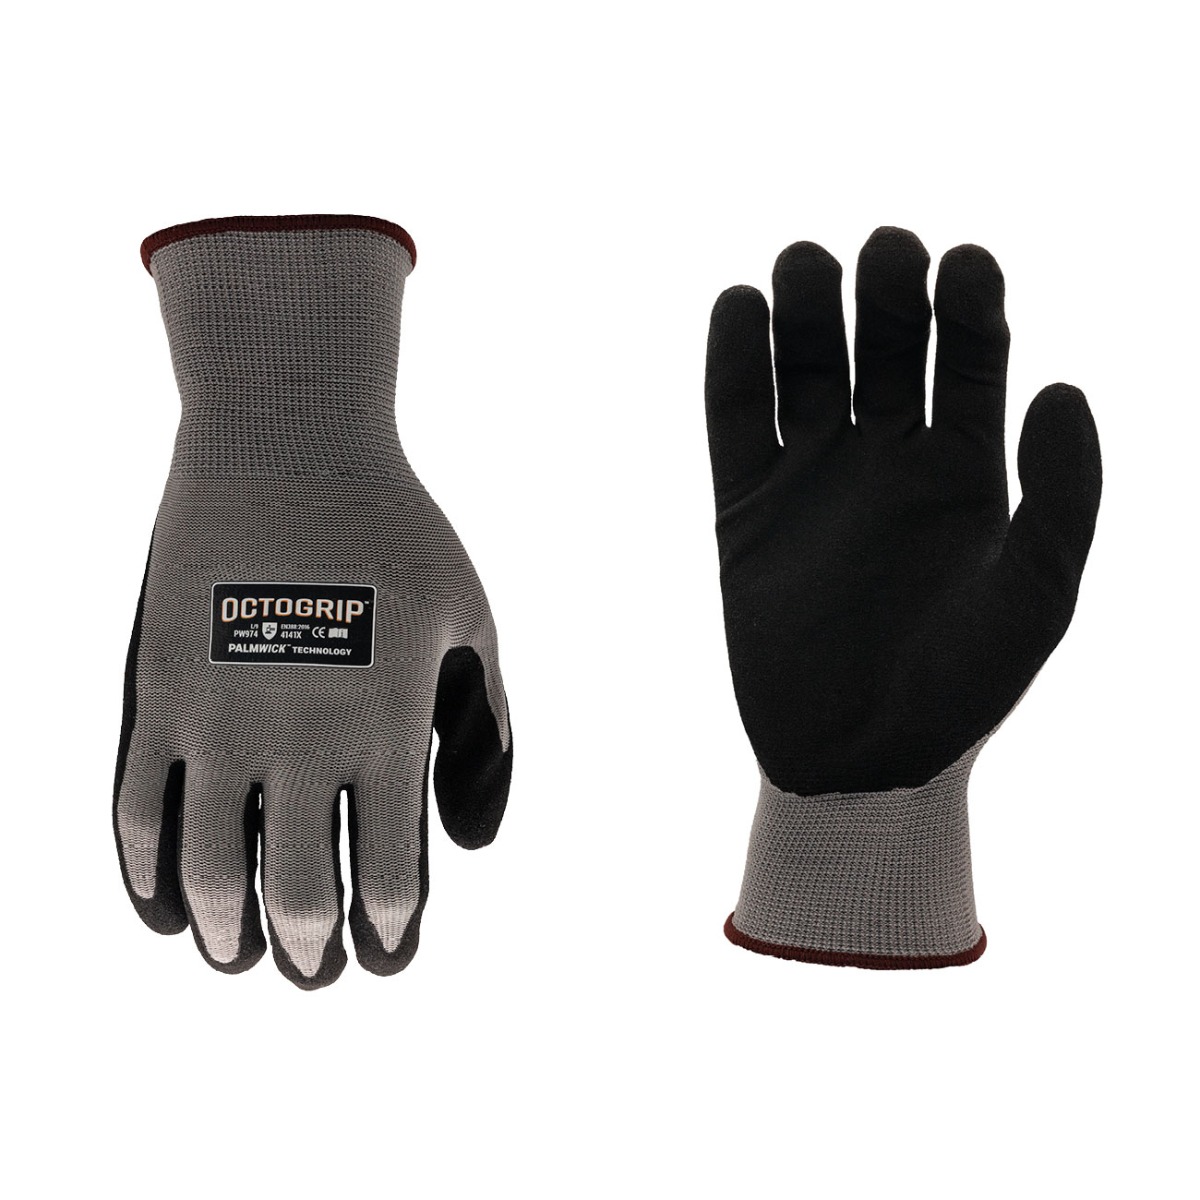 High Performance Manual Handling Glove 13g - Size XL